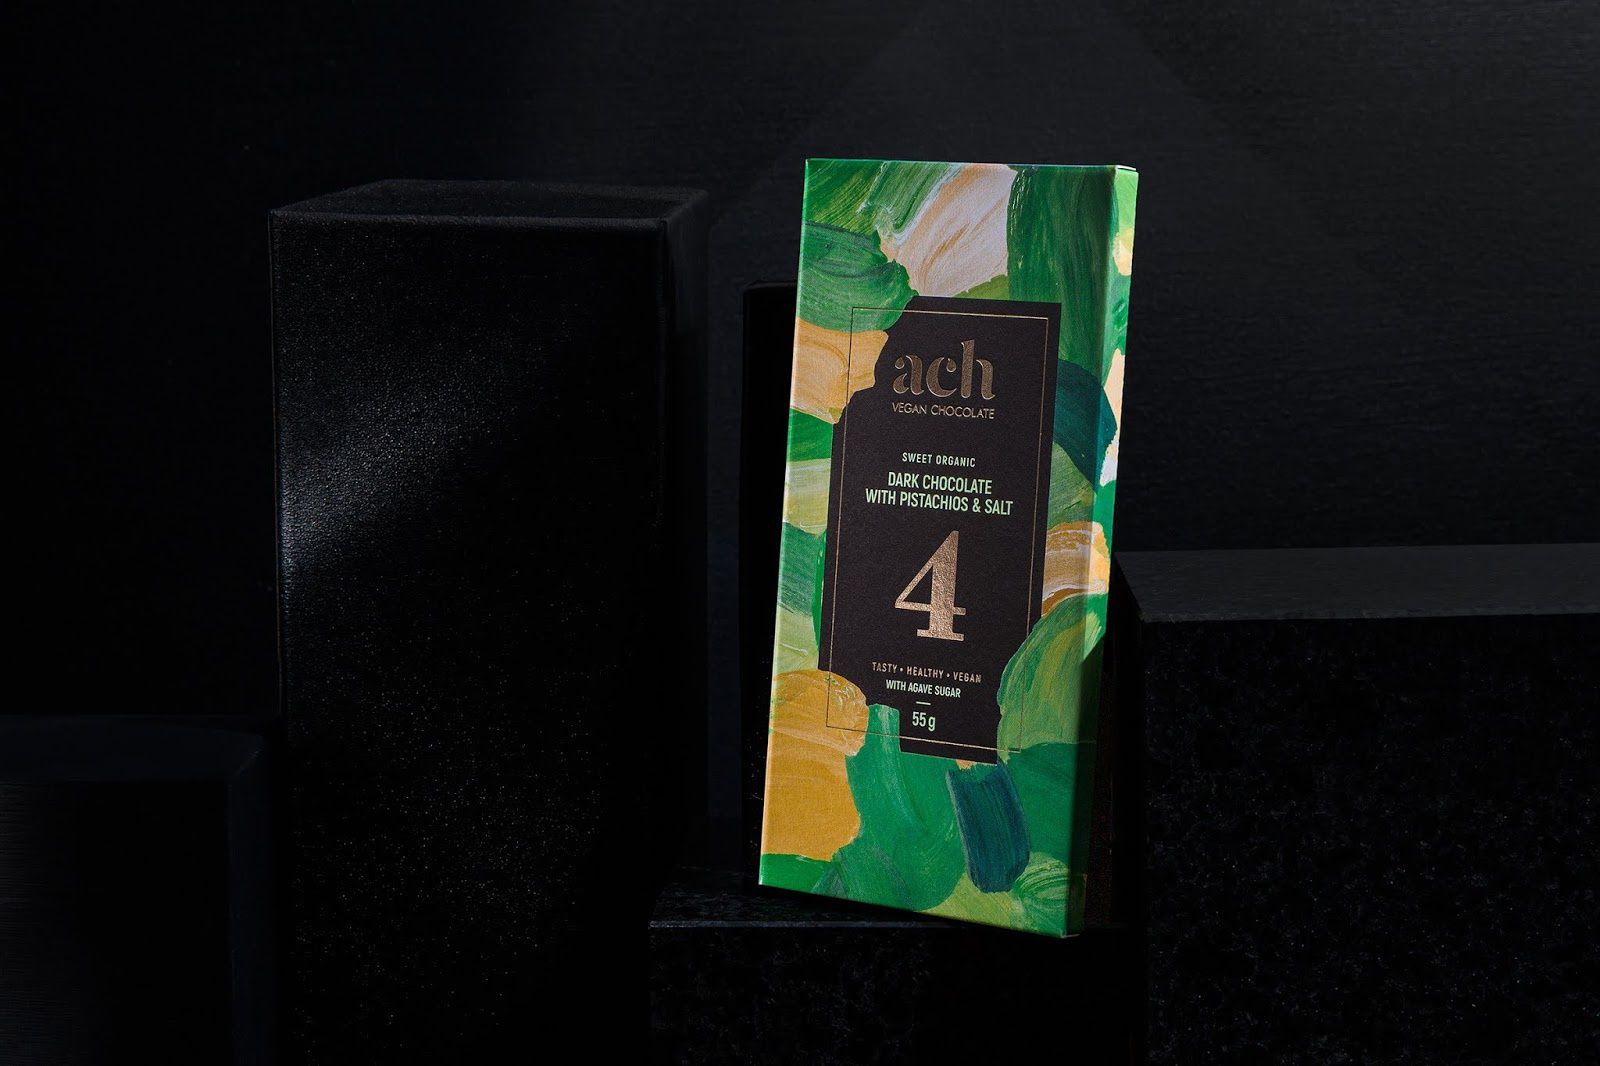 Ach Vegan Chocolate - Collection LA MUSE (chocolat vegan) I Design : Gintarė Marcinkevičienė, Lituanie (octobre 2019)